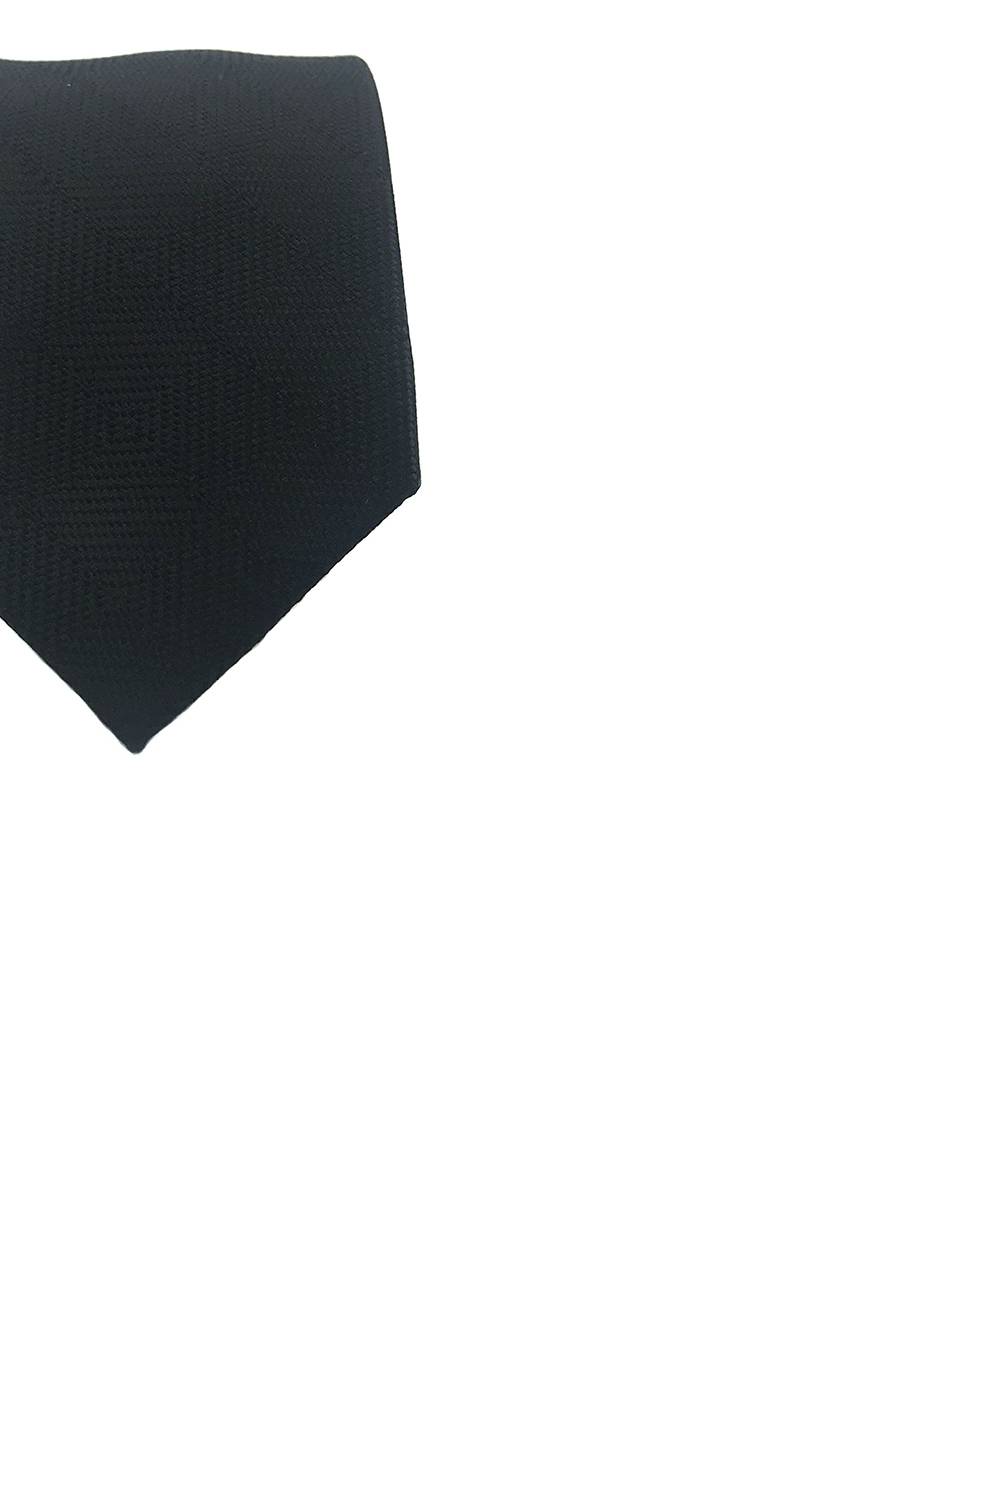 BASEMENT - Corbata Cuadro Negra 7 Cm